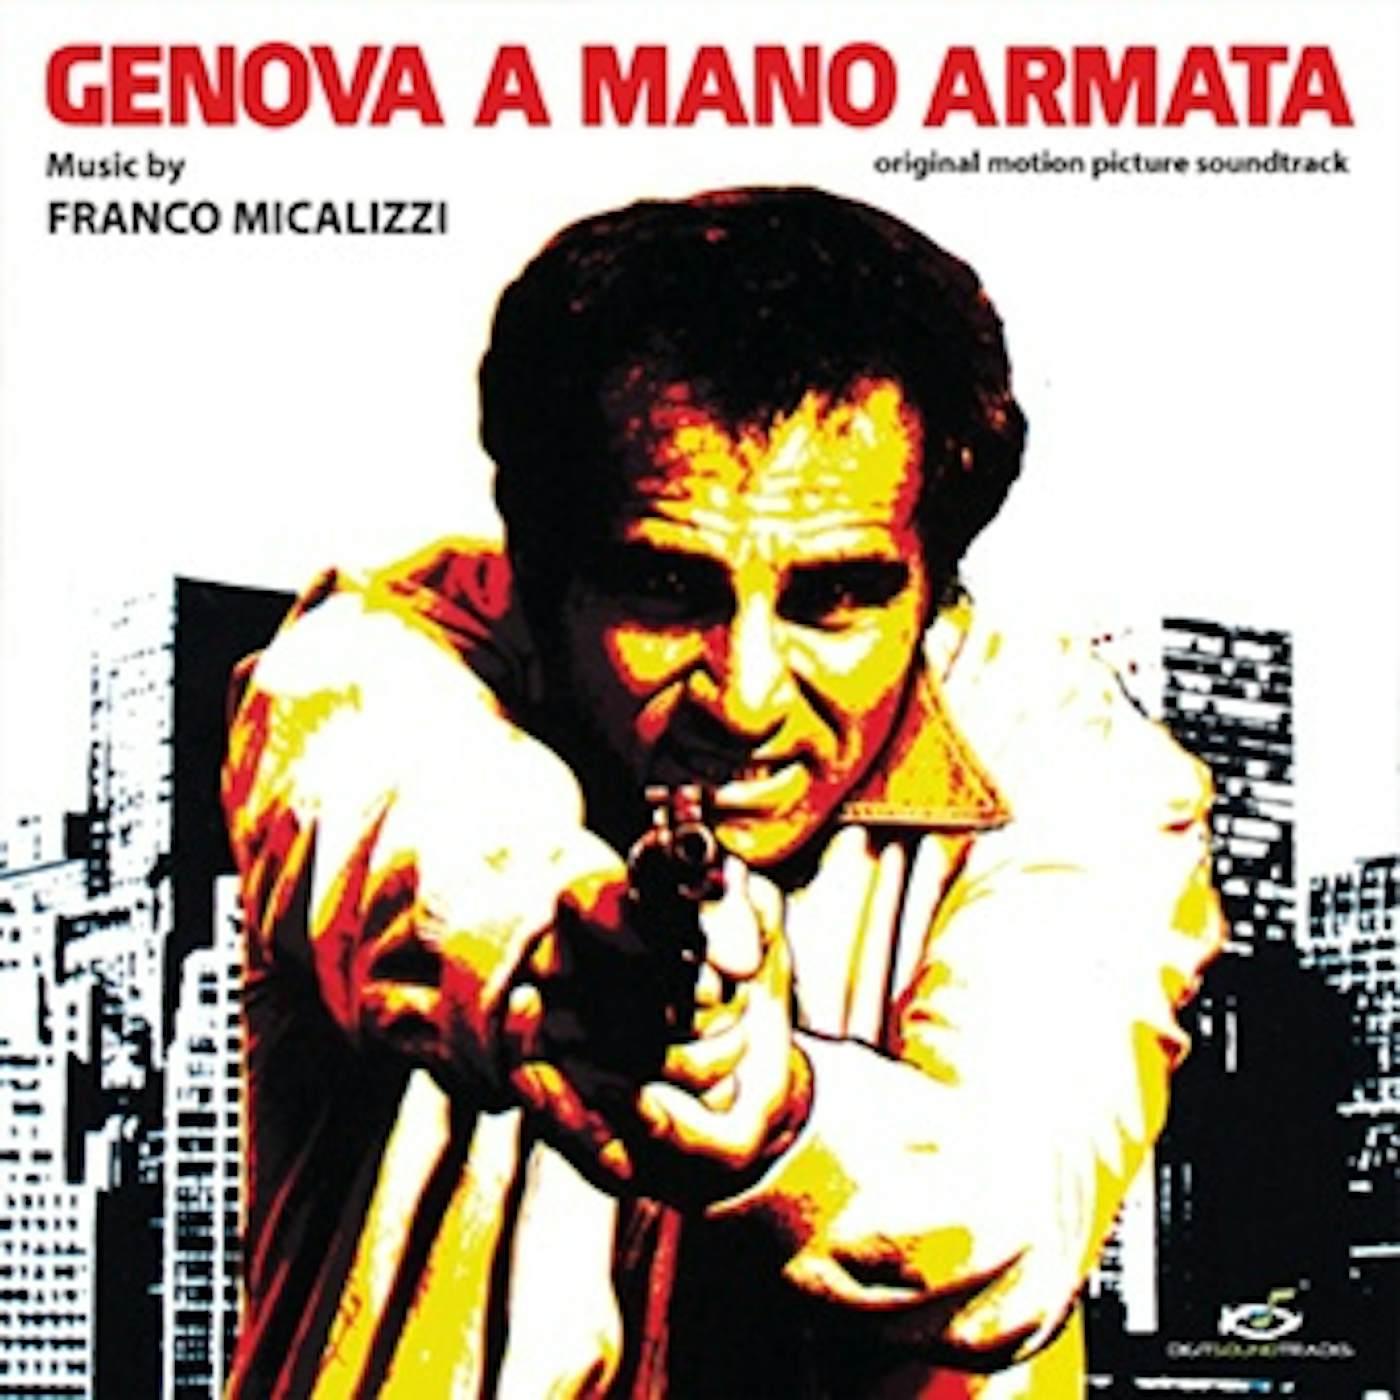 Franco Micalizzi Genova A Mano Armata Vinyl Record